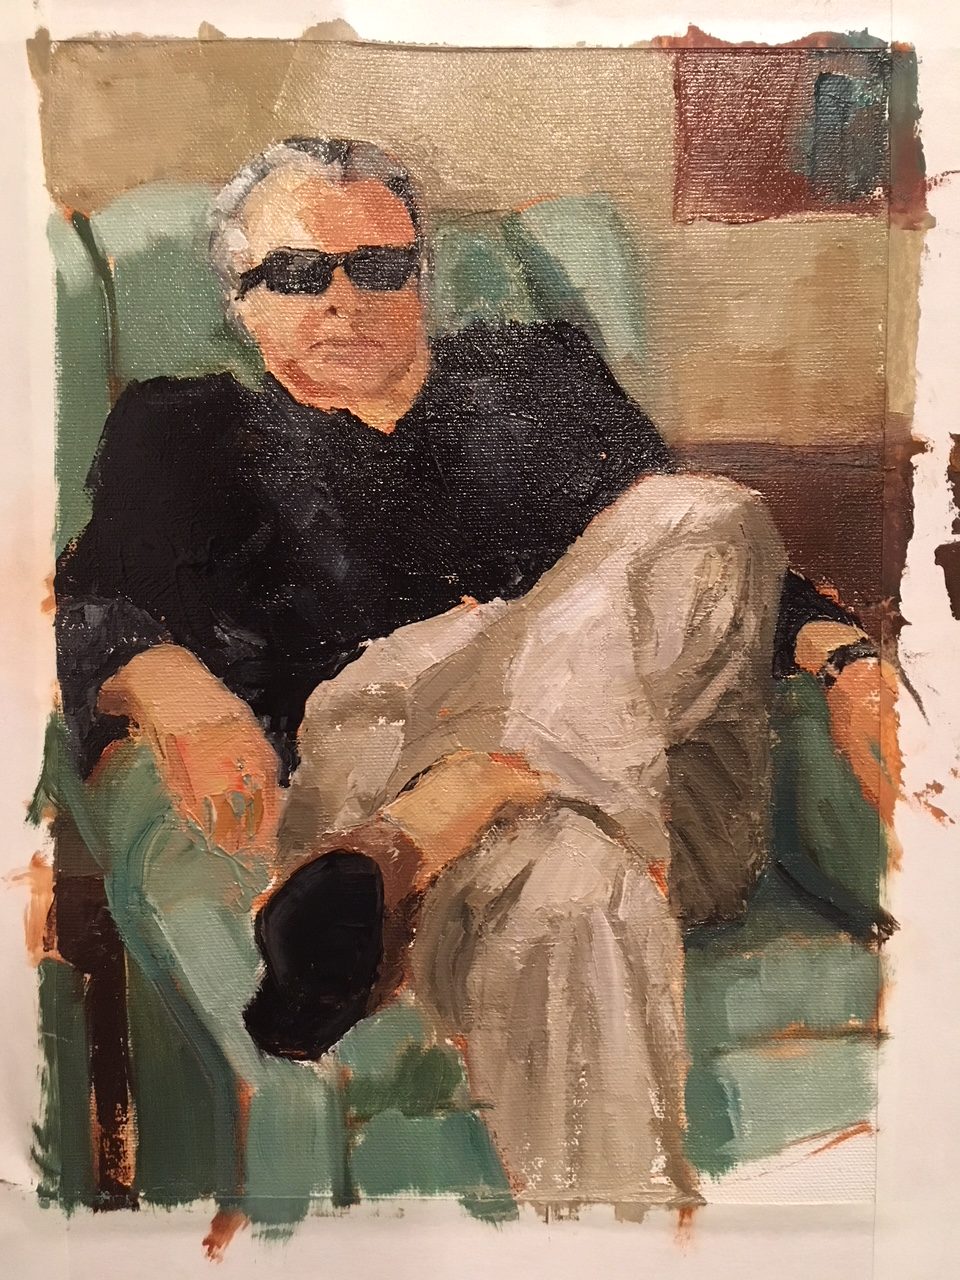 Ron (oil on canvas) by artist Kathleen Gefell, New York